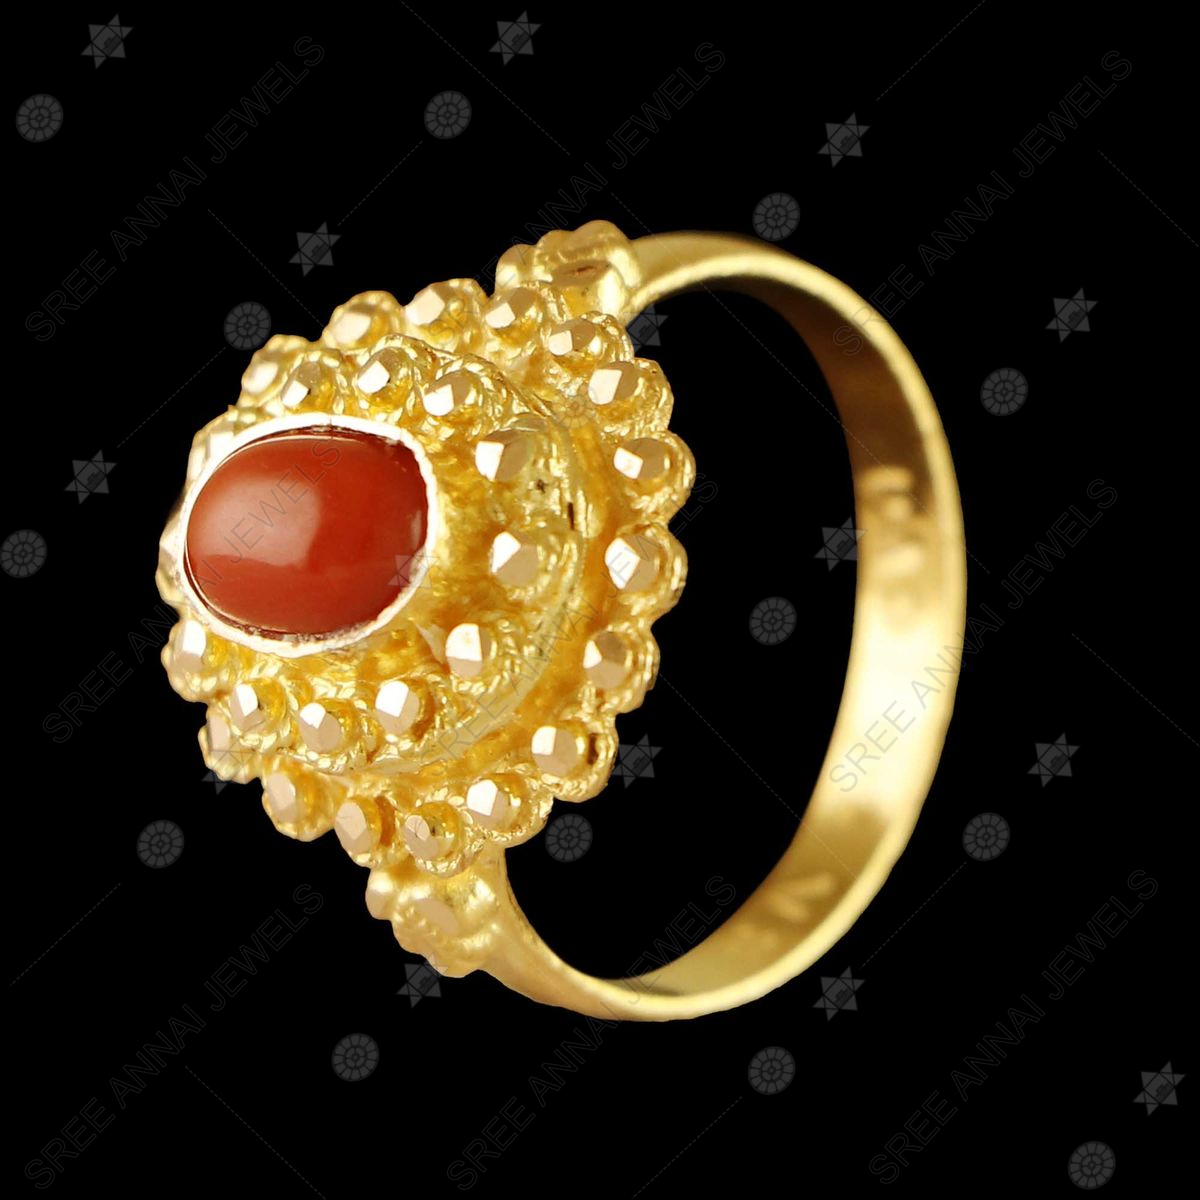 Vintage Poison Ring, Locket Ring, Glass Poison Ring, Poison Ring, Locket  Ring, Adjustable Ring, Vintage Statement Ring - Etsy